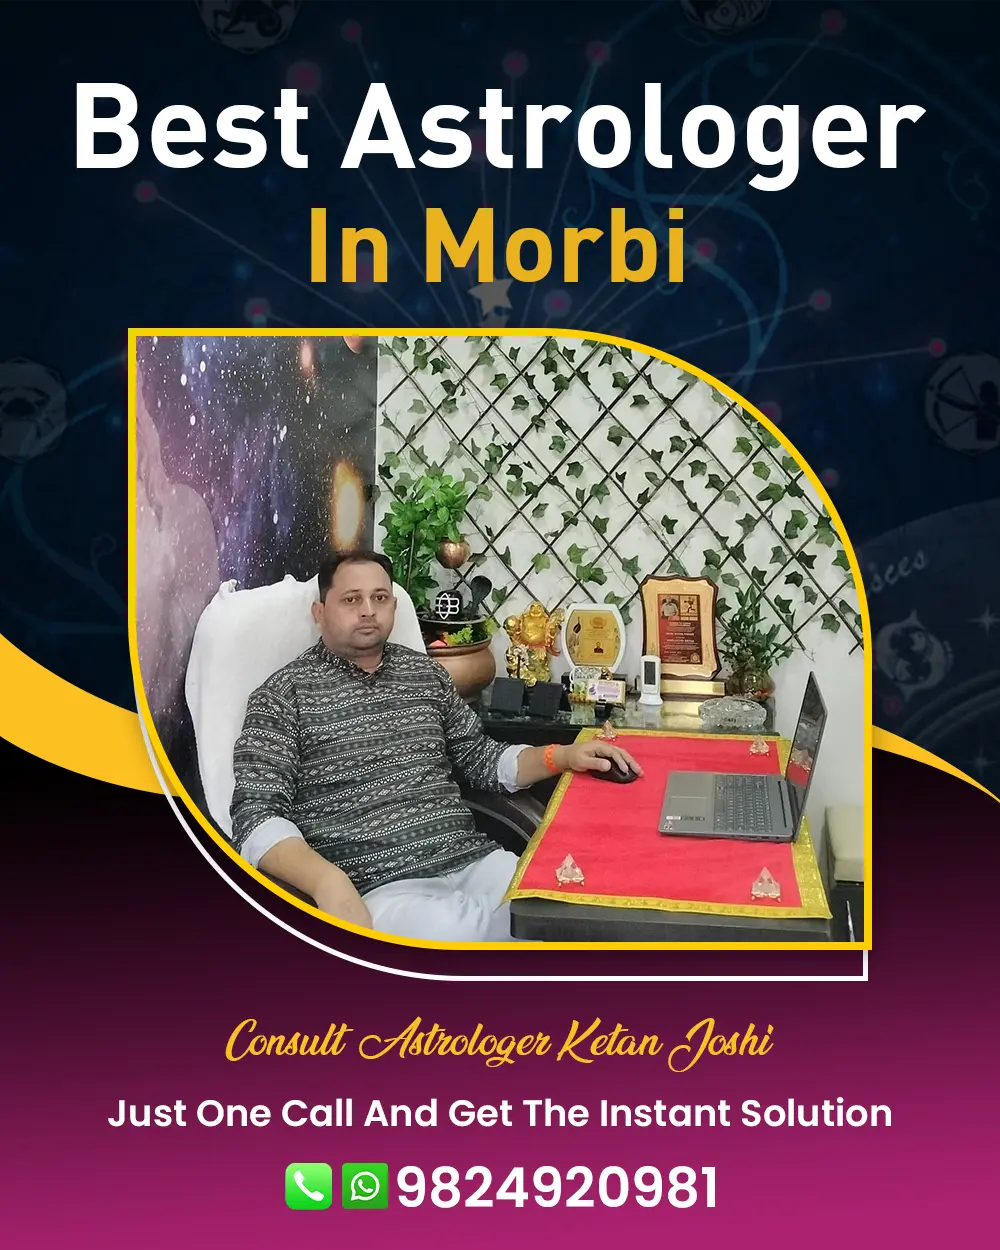 Best Astrologer In Morbi